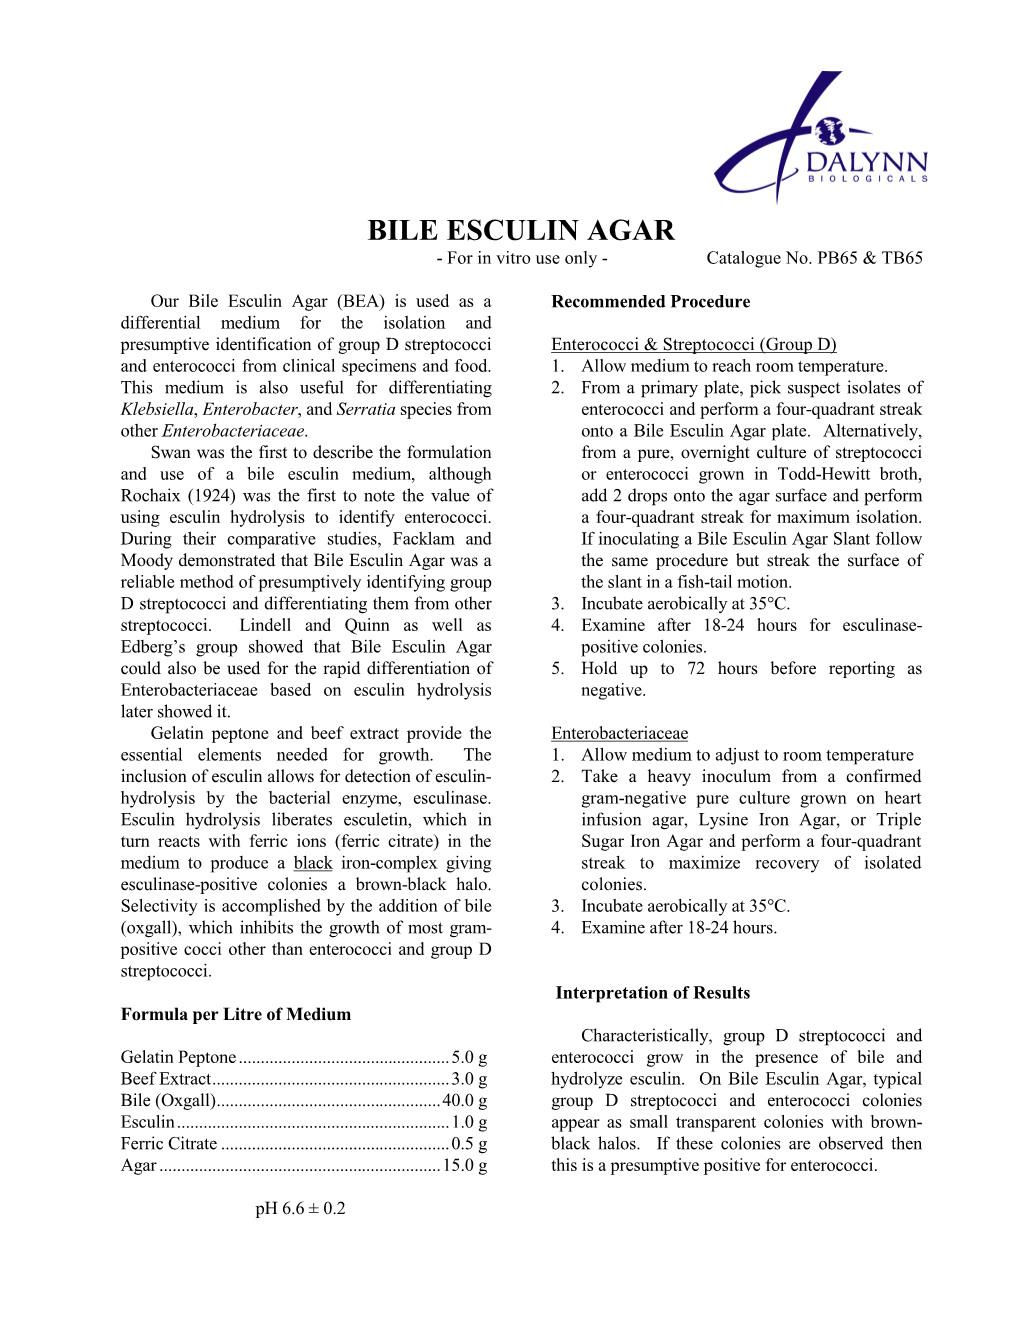 BILE ESCULIN AGAR - for in Vitro Use Only - Catalogue No